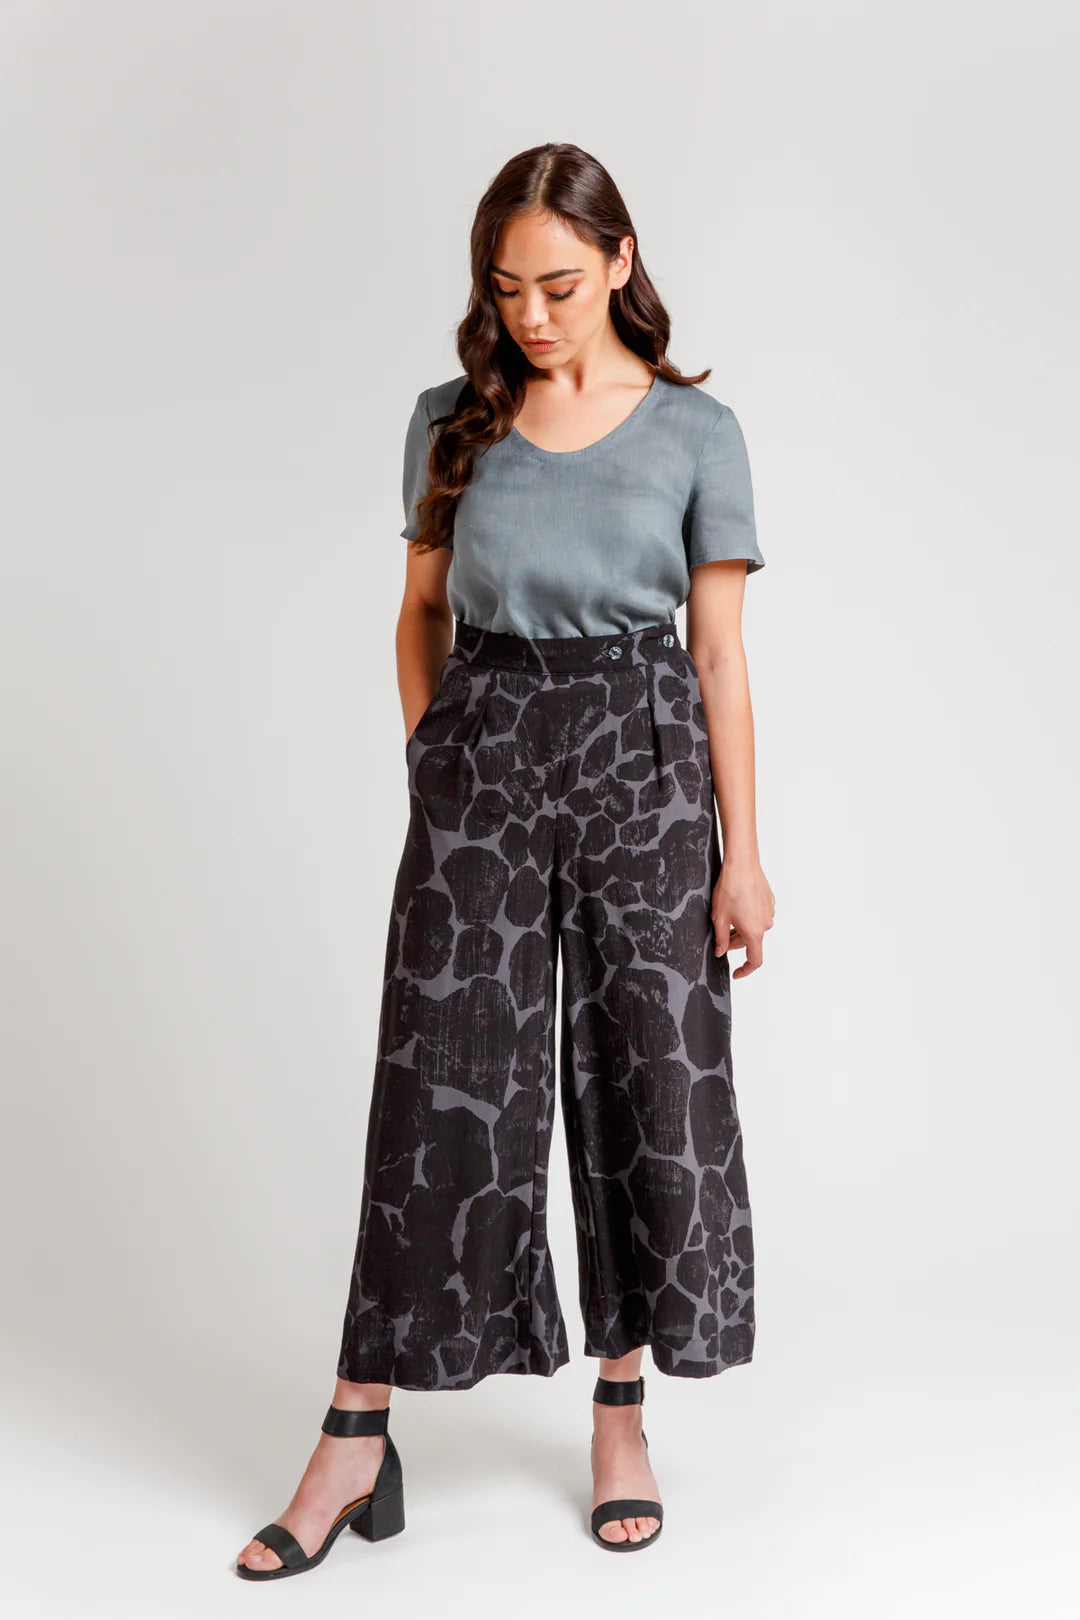 Megan Nielsen - Flint Pants and Shorts Sewing Pattern